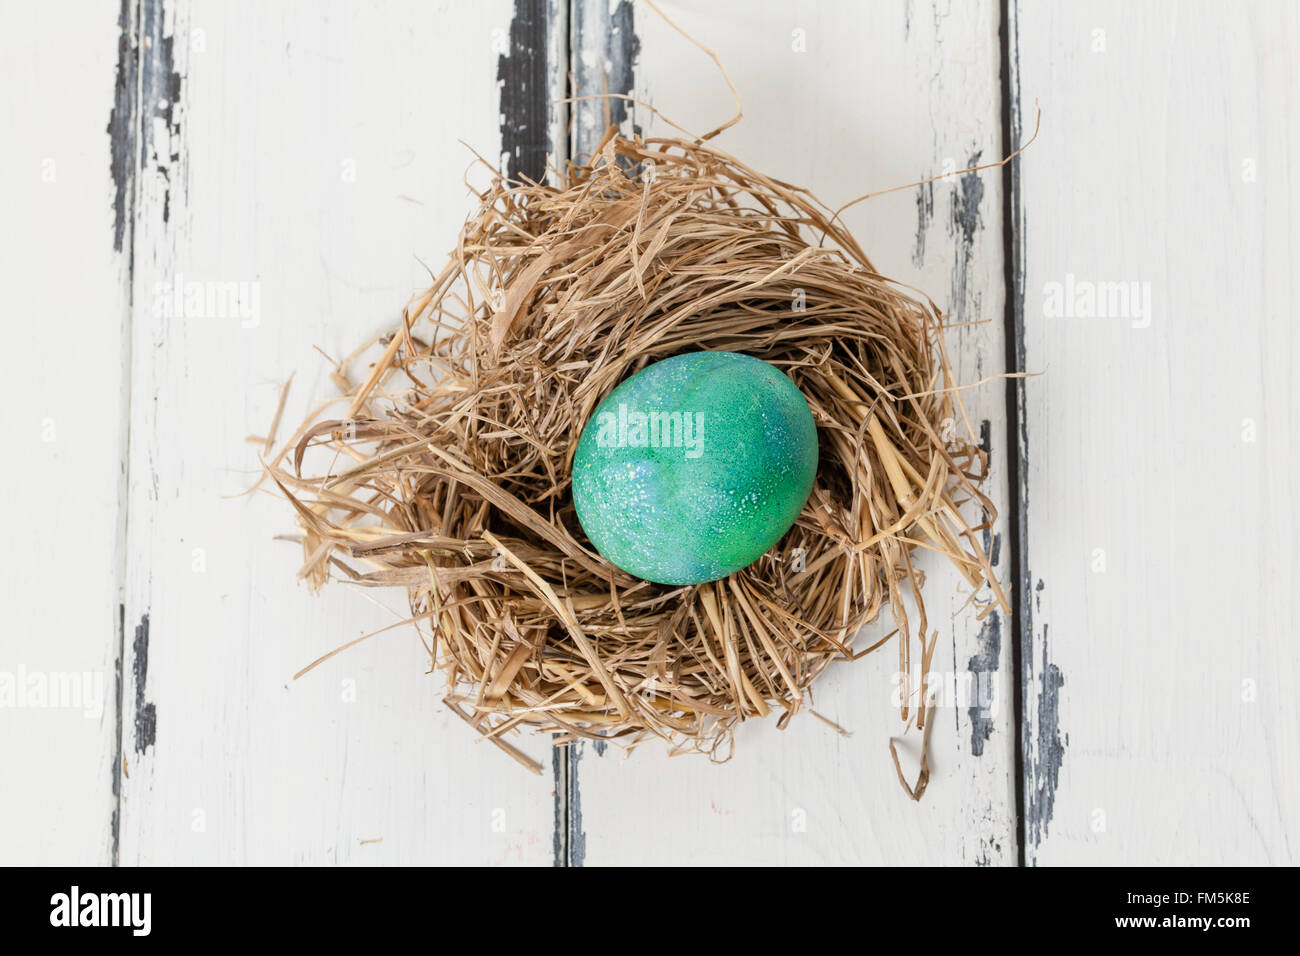 green egg in bird nest from above Stock Photo